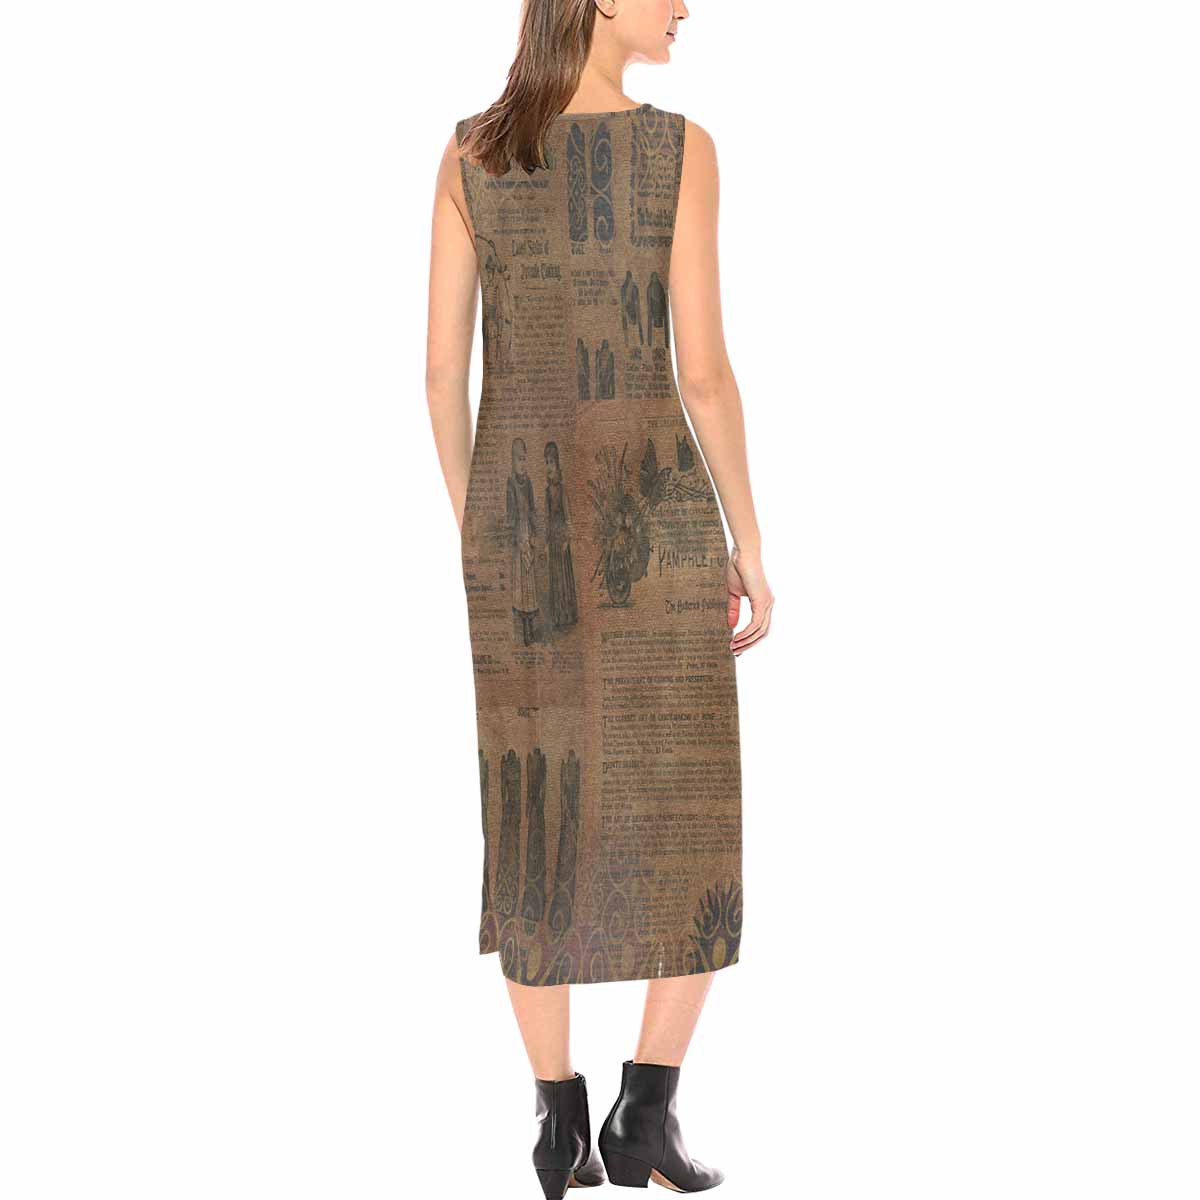 Antique General long chic dress, MODEL 09538, design 39